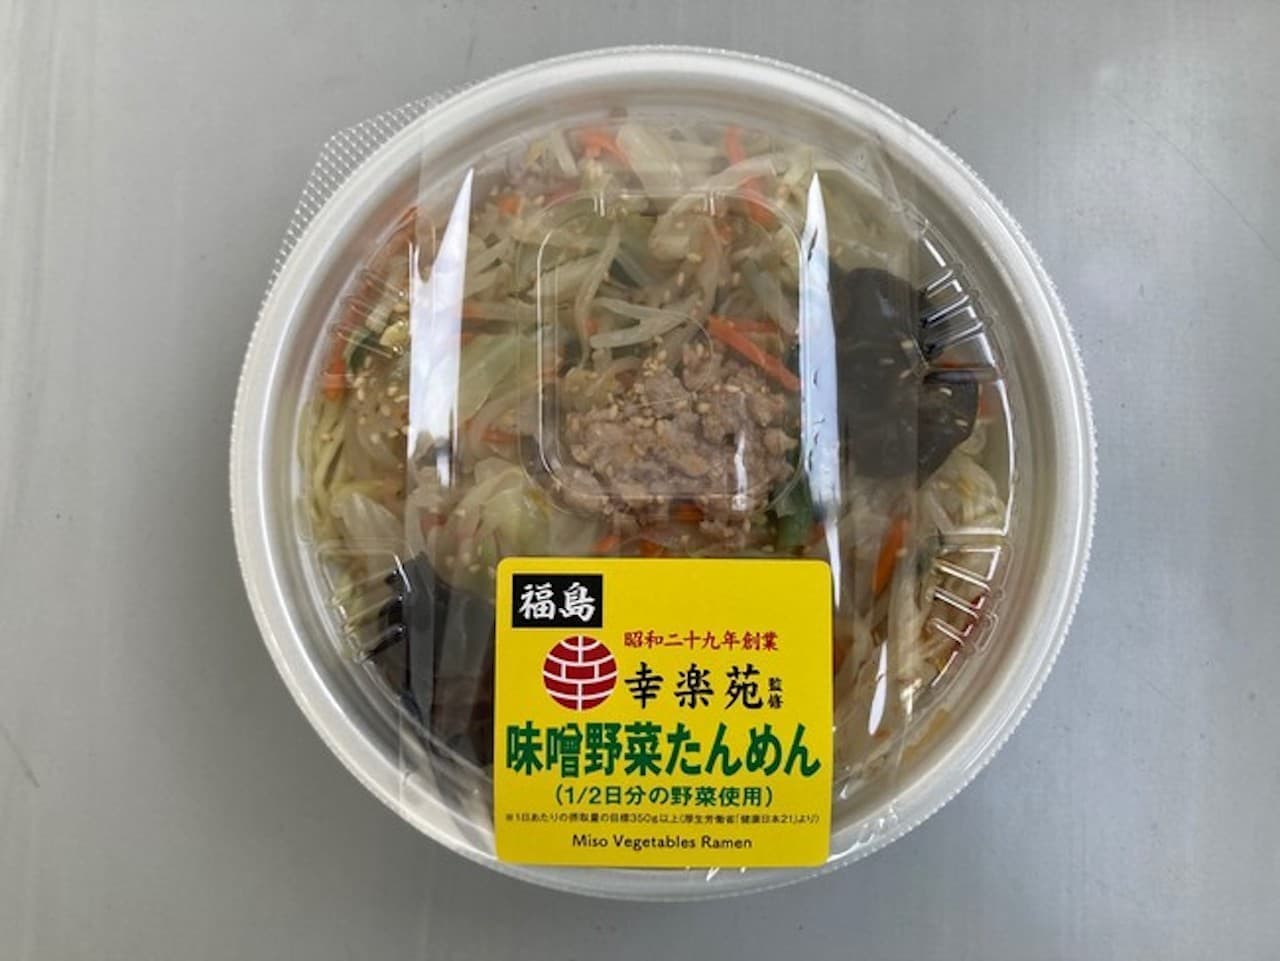 Lawson "Miso Vegetable Tanmen Supervised by Kourakuen"